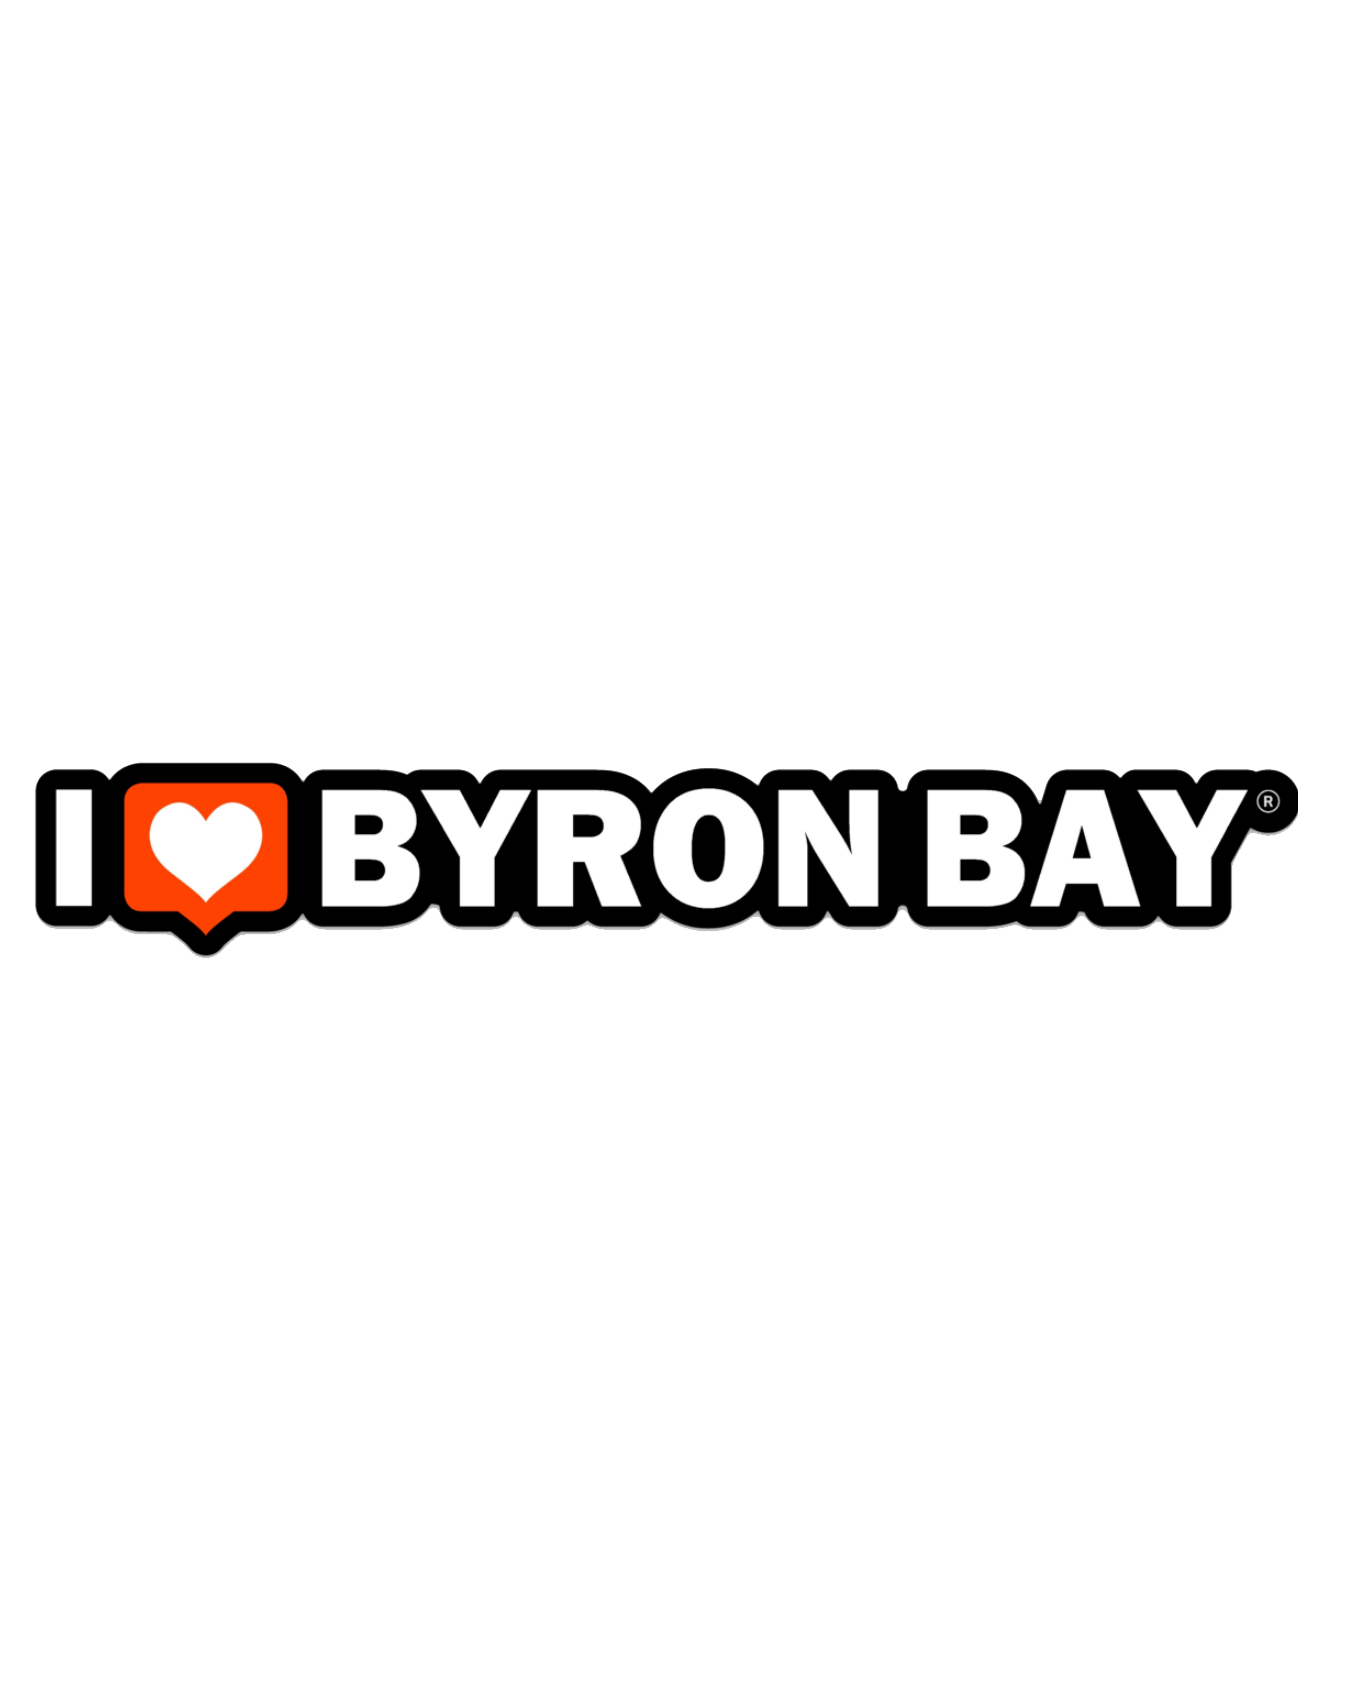 I LOVE BYRON BAY Bumper